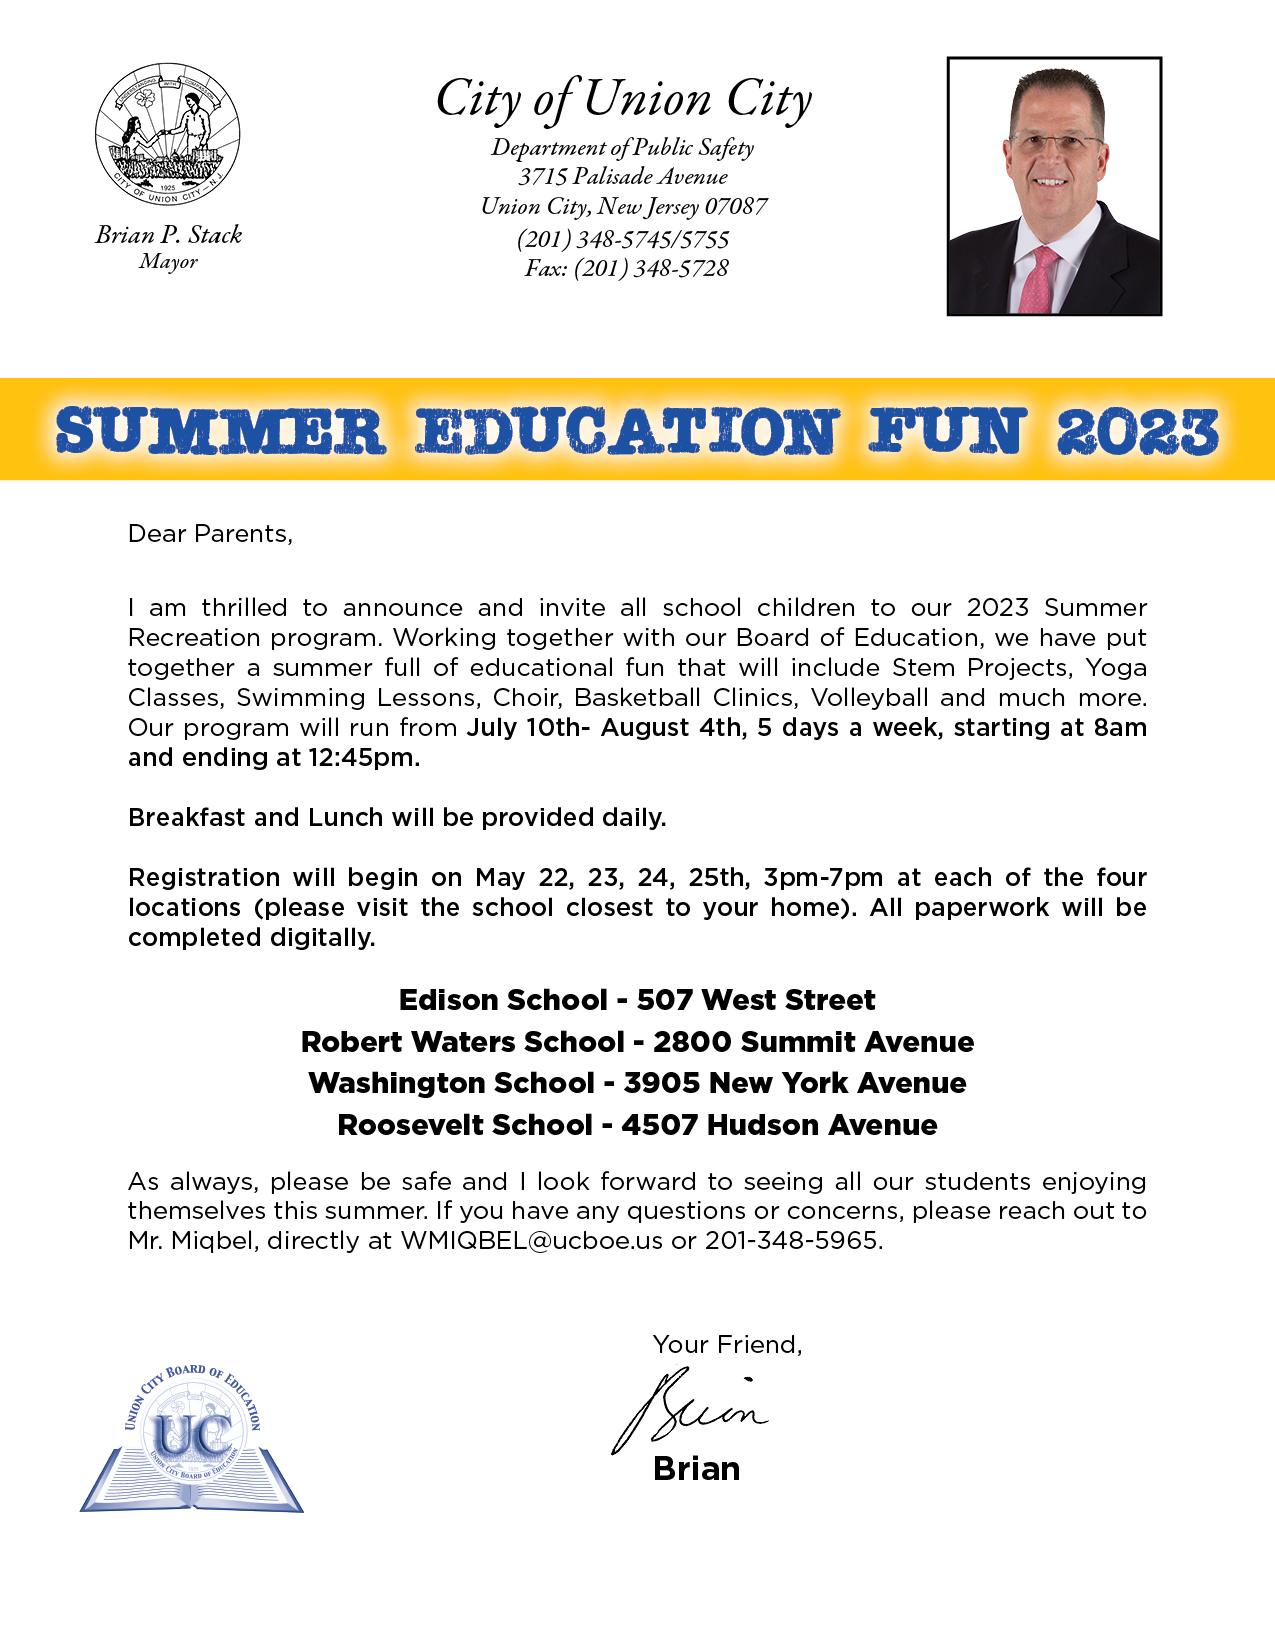 The 2023 Union City Summer Recreation Program